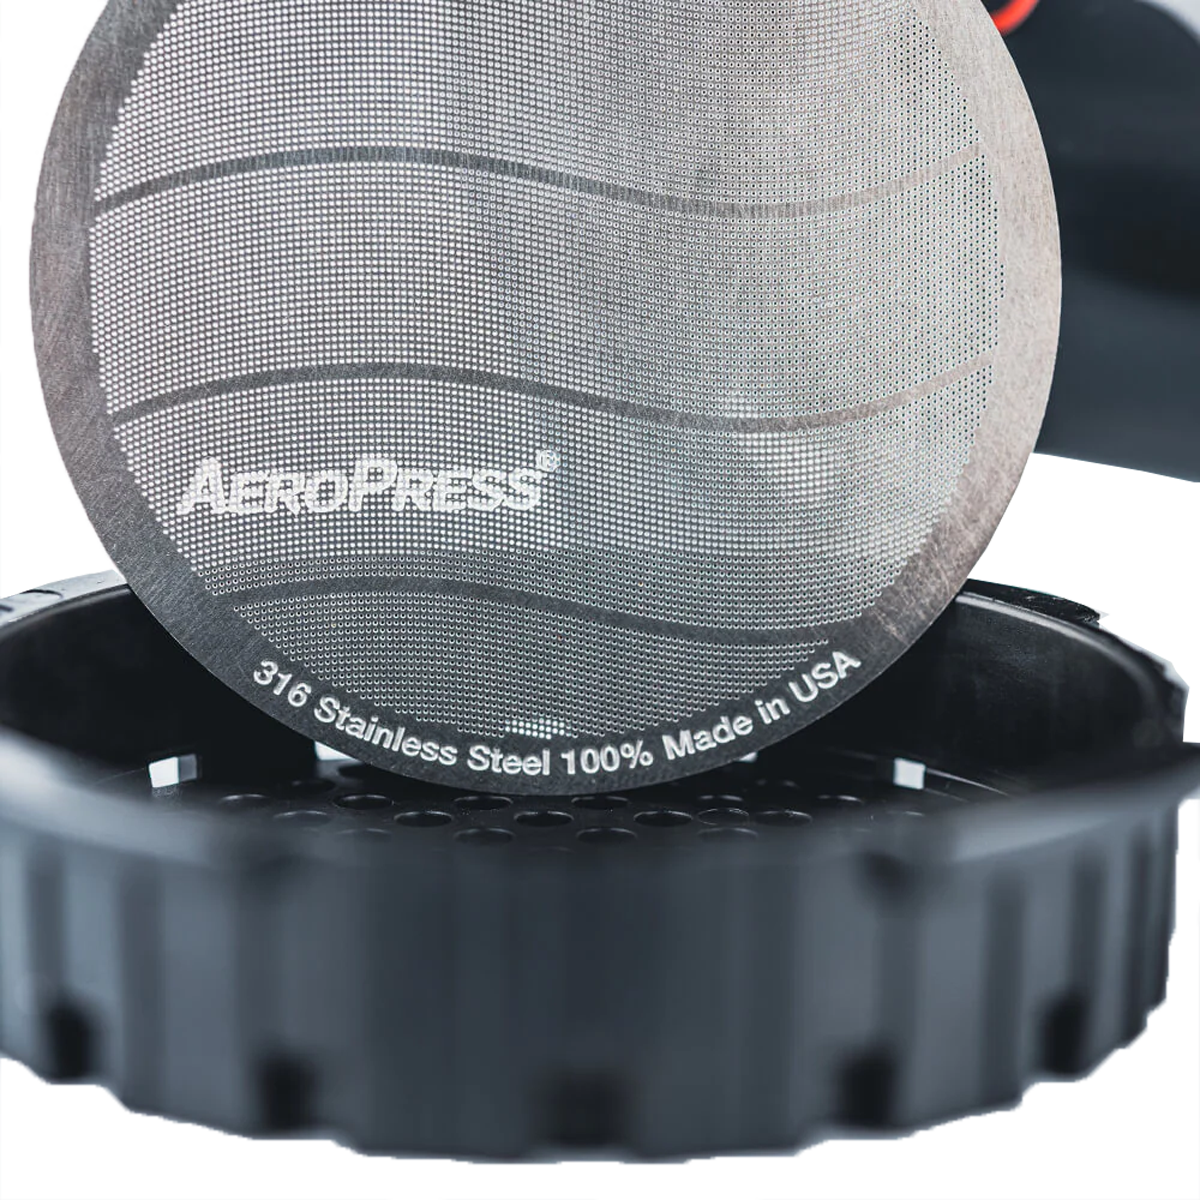 AeroPress Stainless Steel Filter alternate view